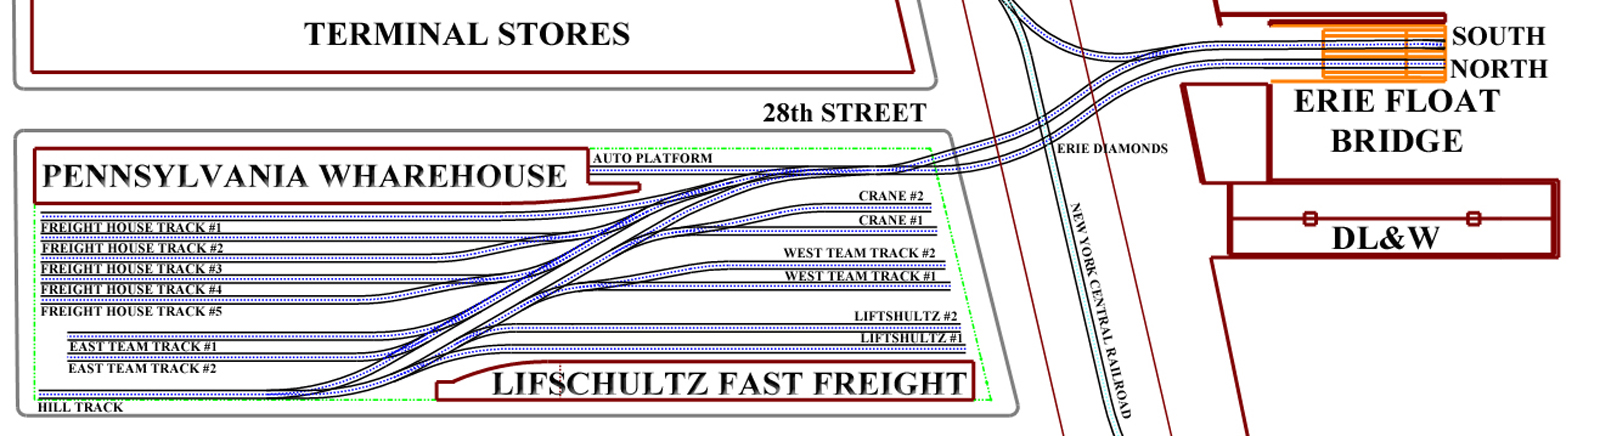 28th Street Map